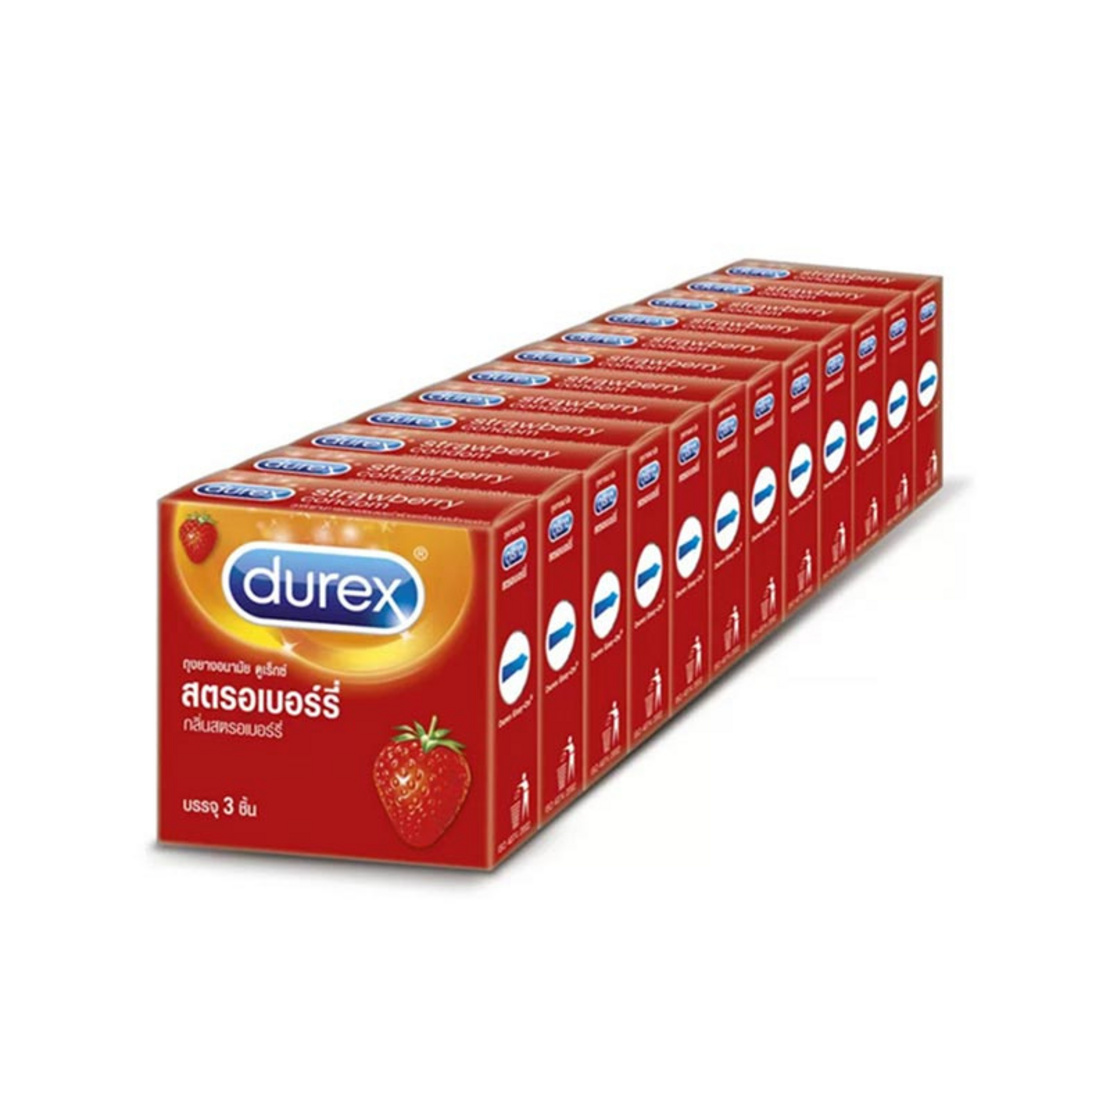 Durex ถุงยางอนามัย สตรอเบอร์รี่ 1 แพ็ก (12 กล่อง) | Allonline